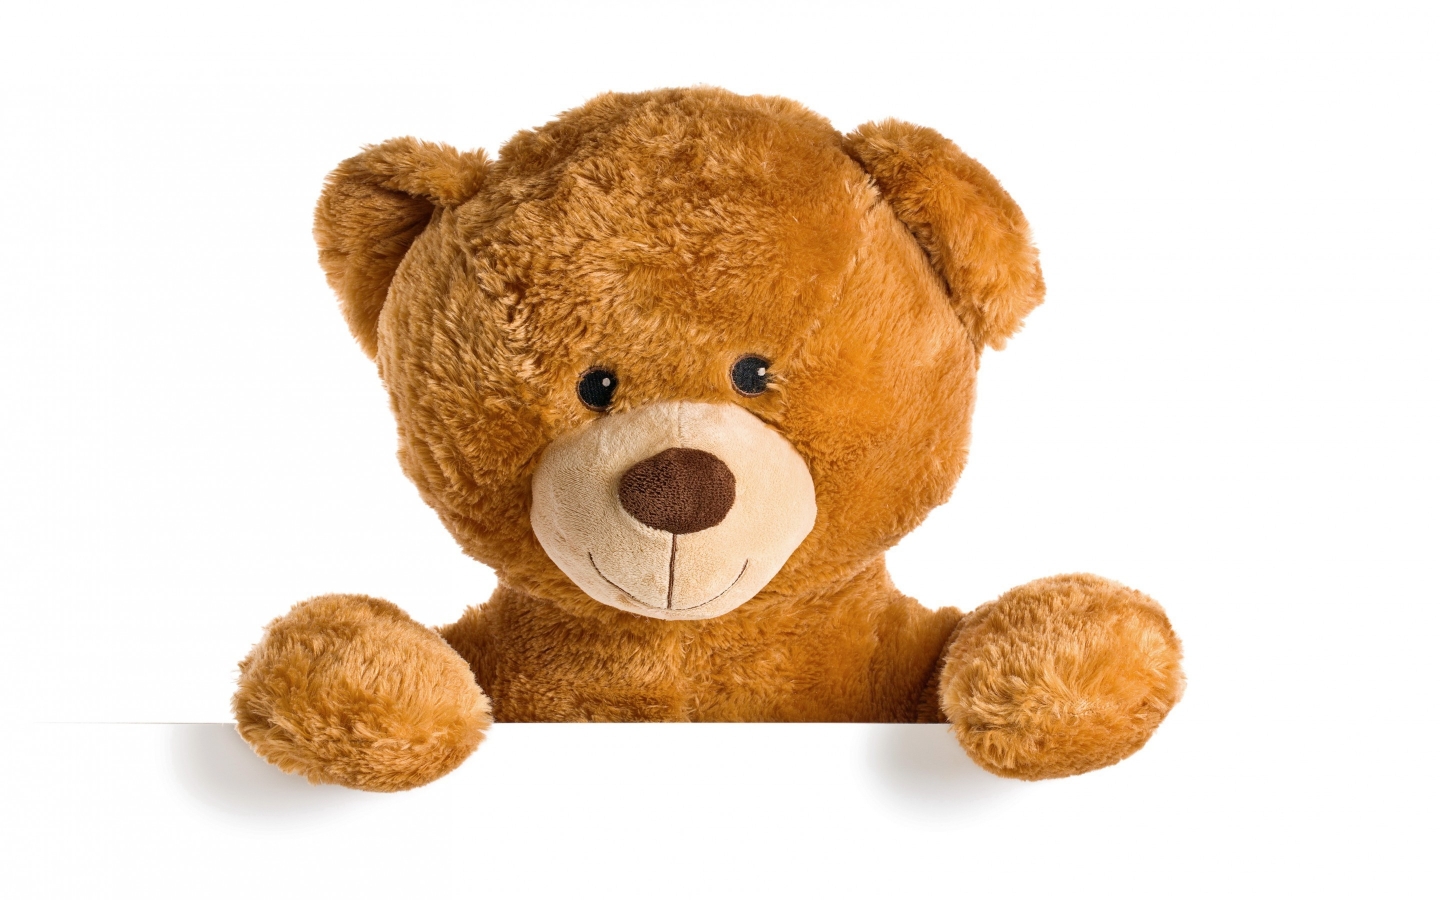 Cute Teddy Bear for 1440 x 900 widescreen resolution